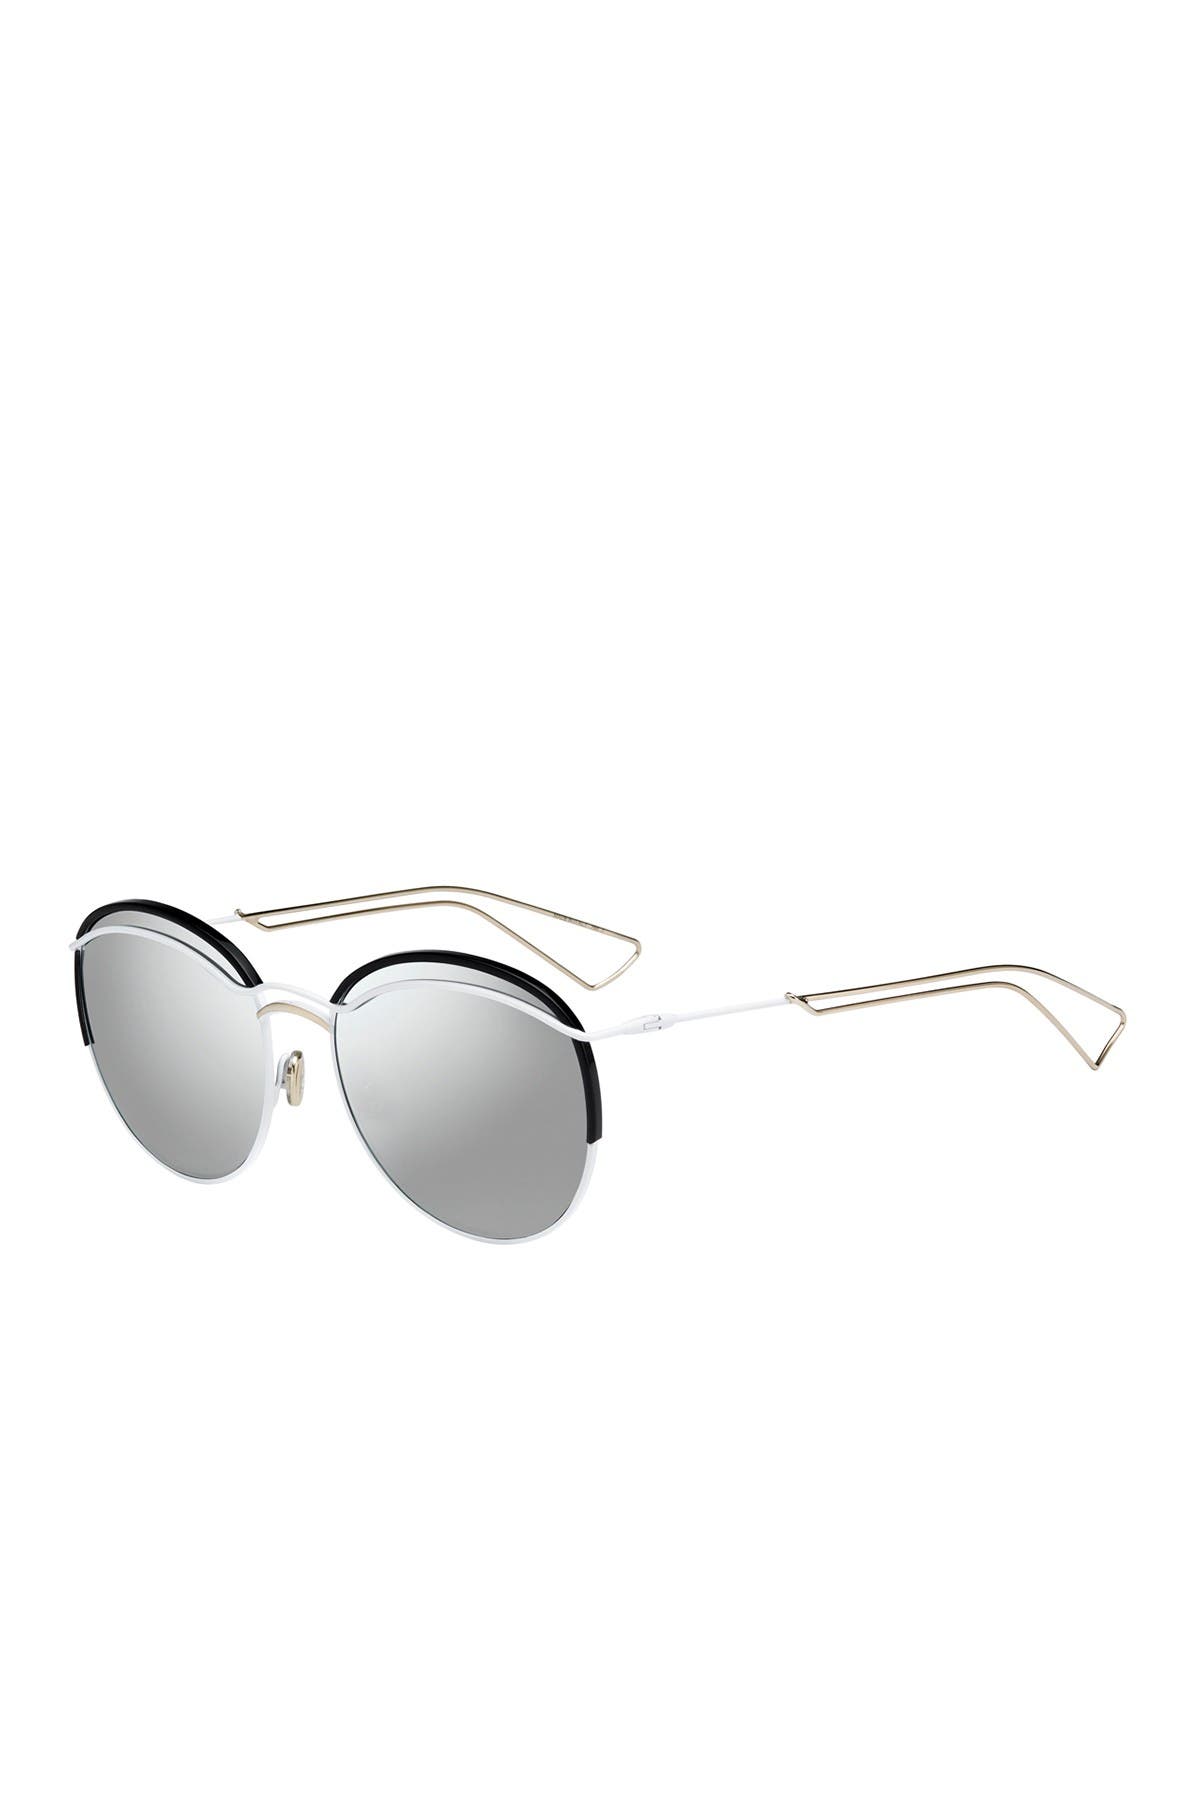 dior sunglasses nordstrom rack